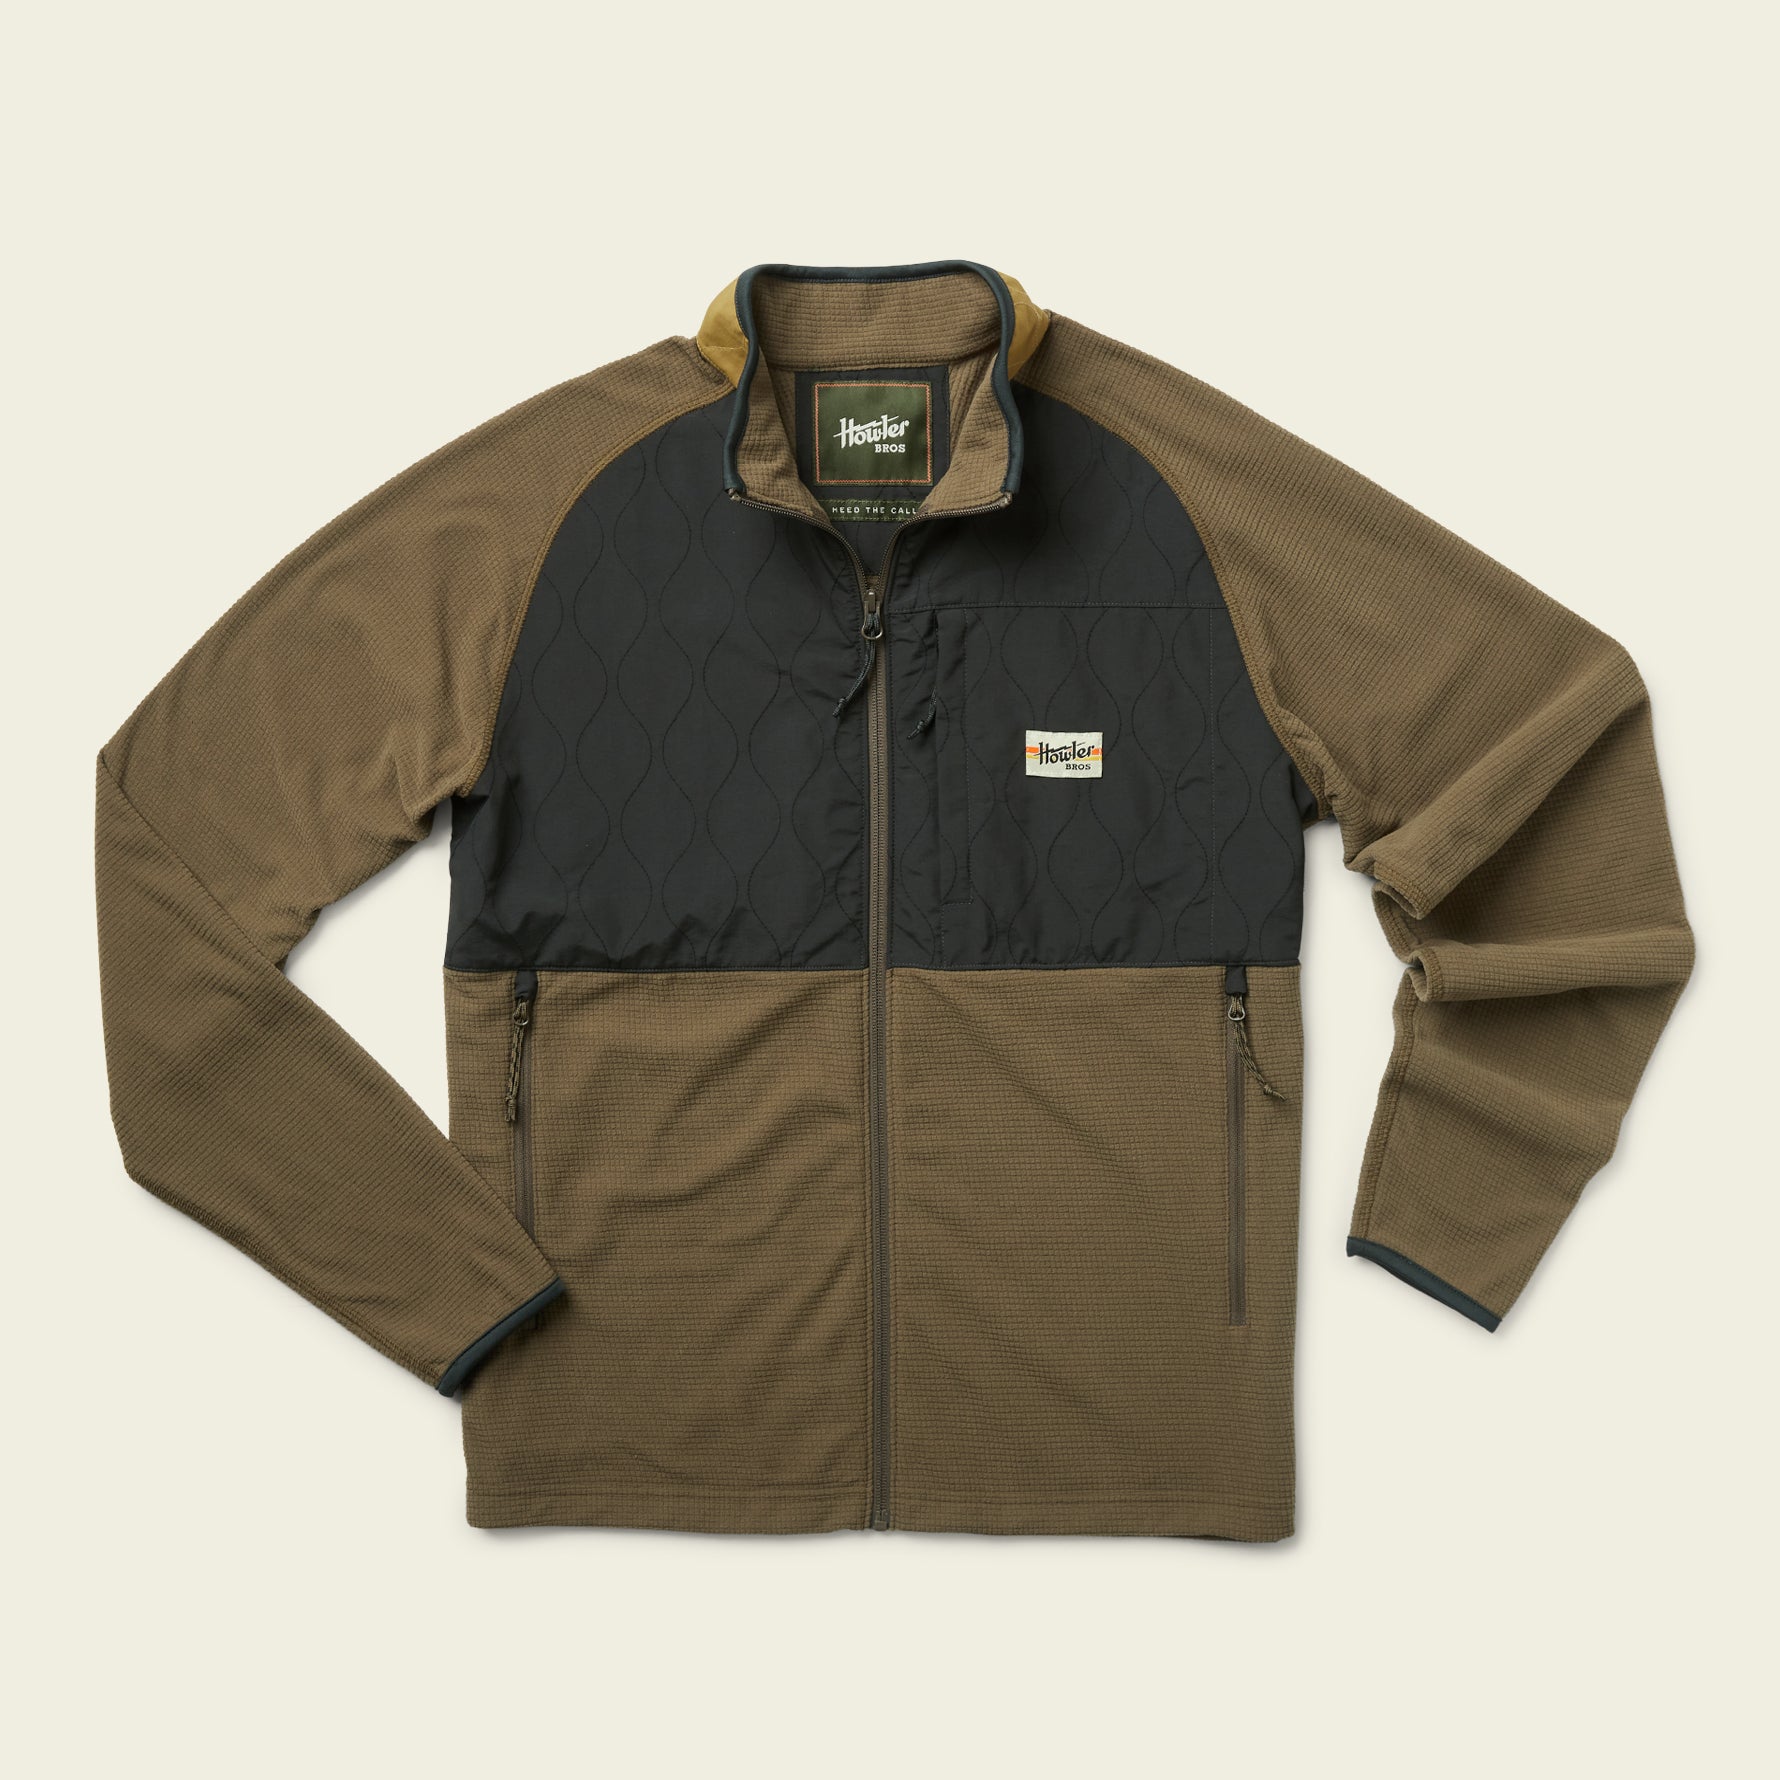 BROTHERS – Jacket HOWLER Grid Talisman Fleece